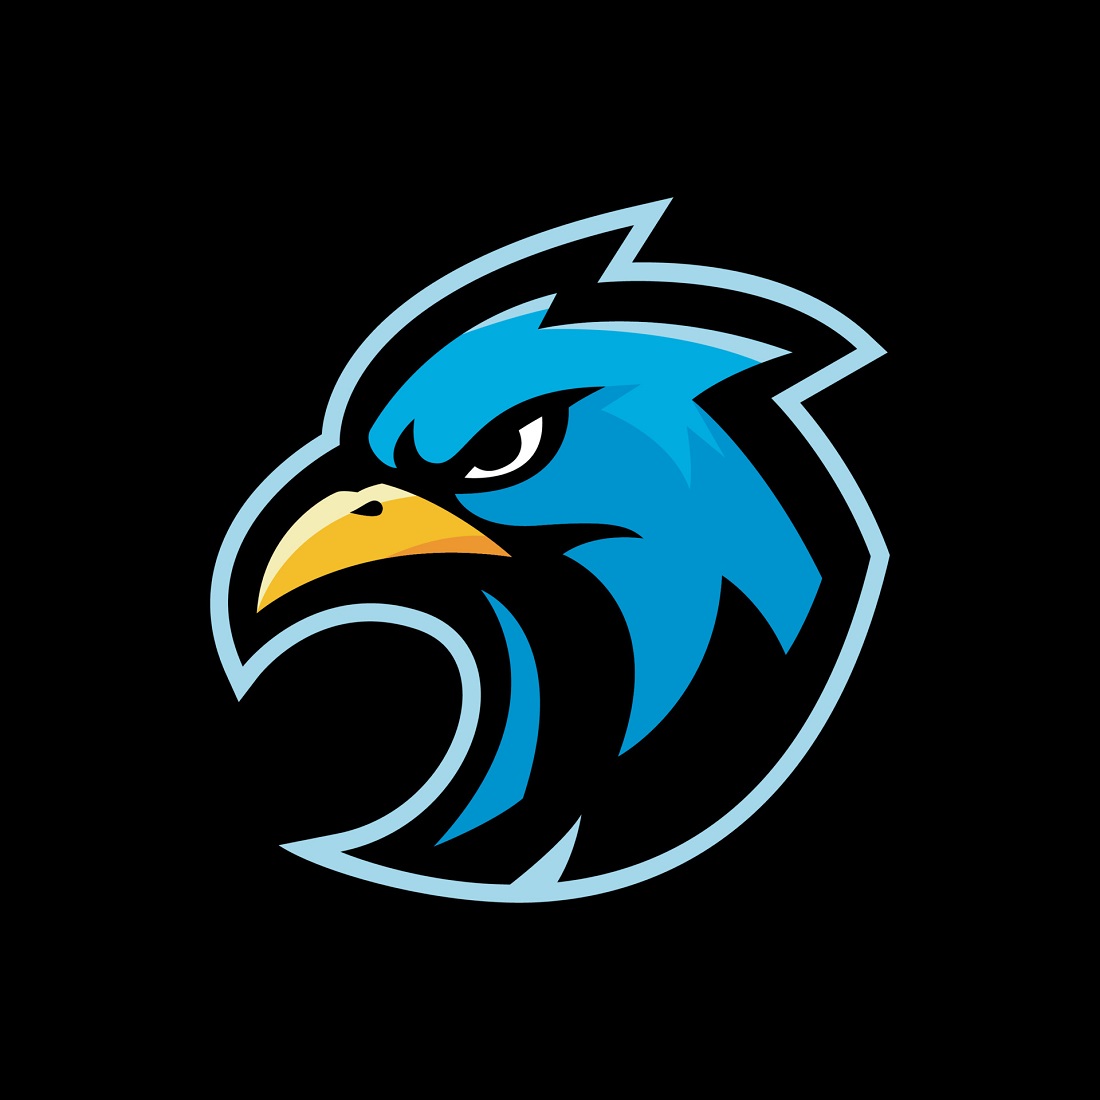 Eagle mascot e sports logo preview image.